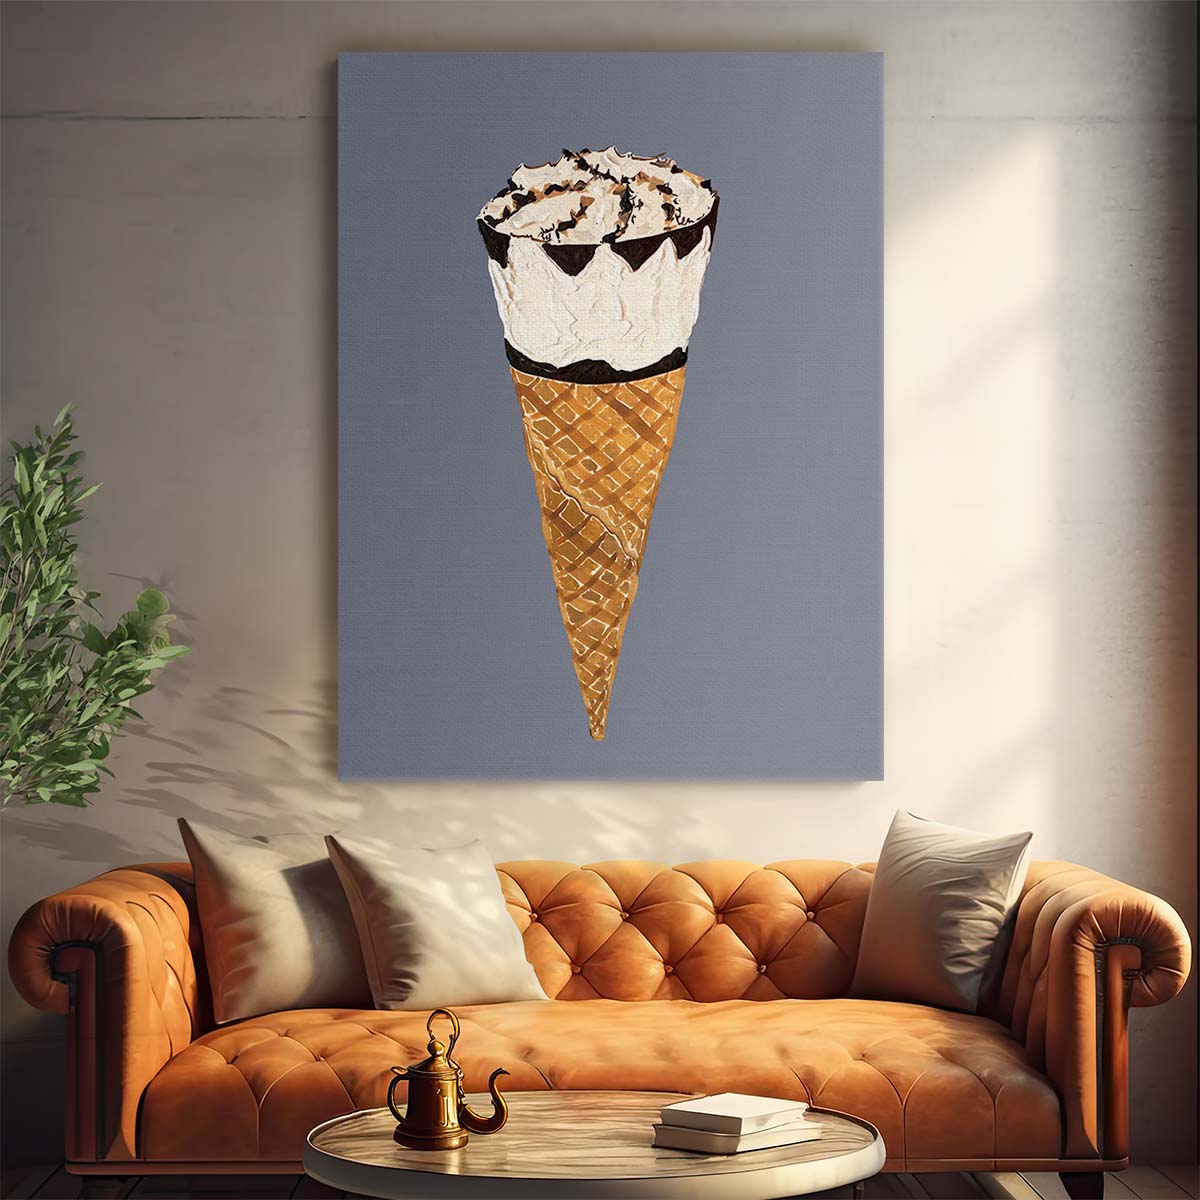 Illustrated Cornetto Ice Cream Dessert Kitchen Wall Art by Luxuriance Designs, made in USA